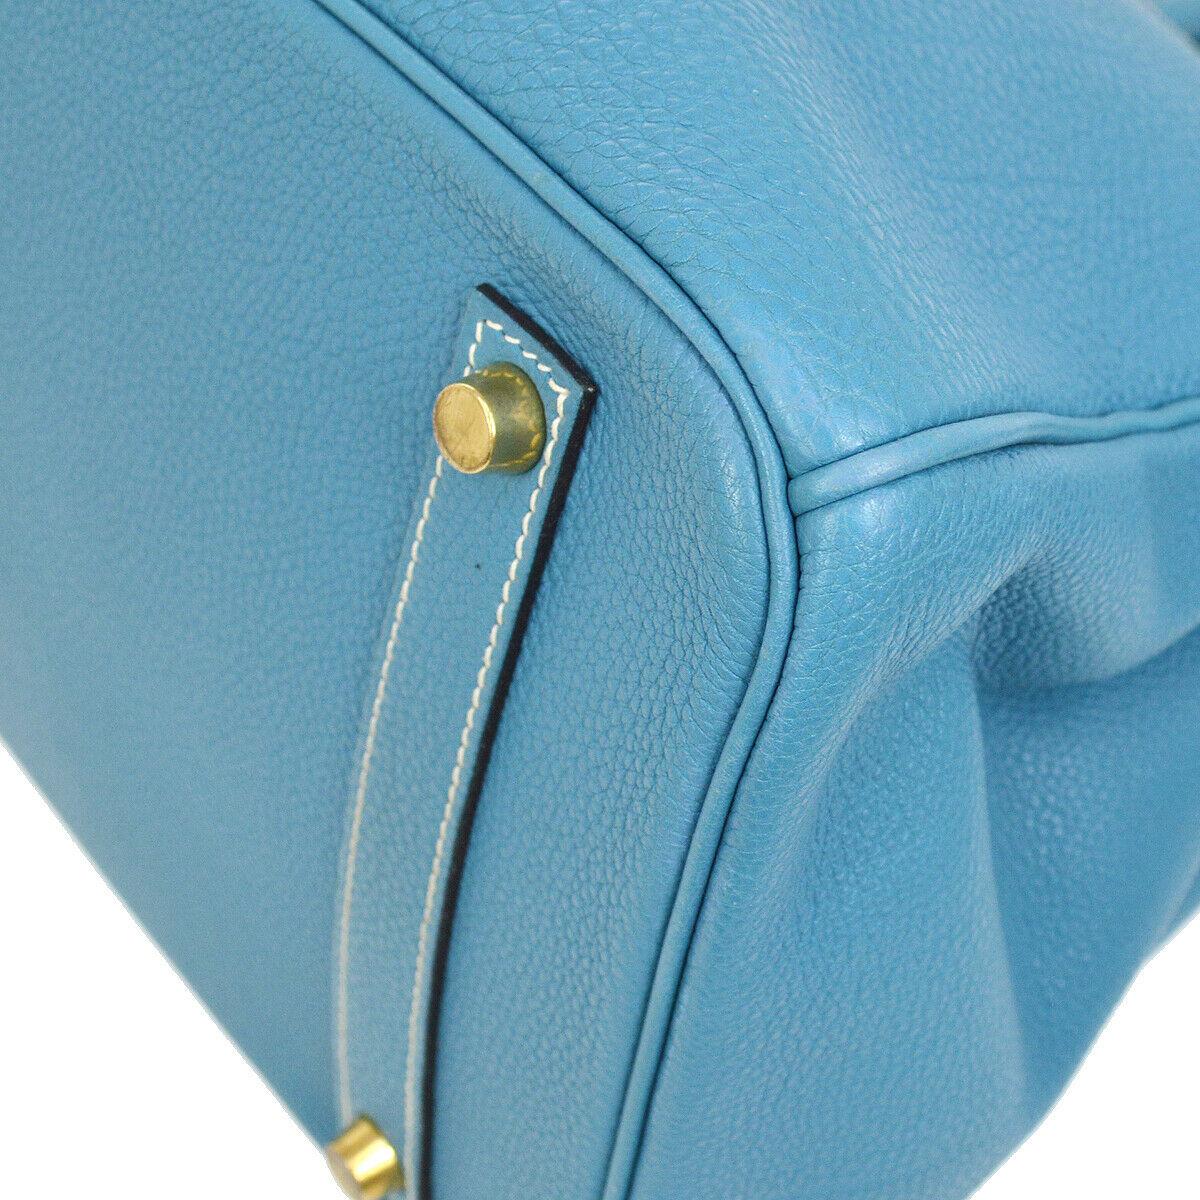 Hermes Birkin 35 Blue Leather Gold Top Carryall Handle Satchel Travel Tote Bag 2